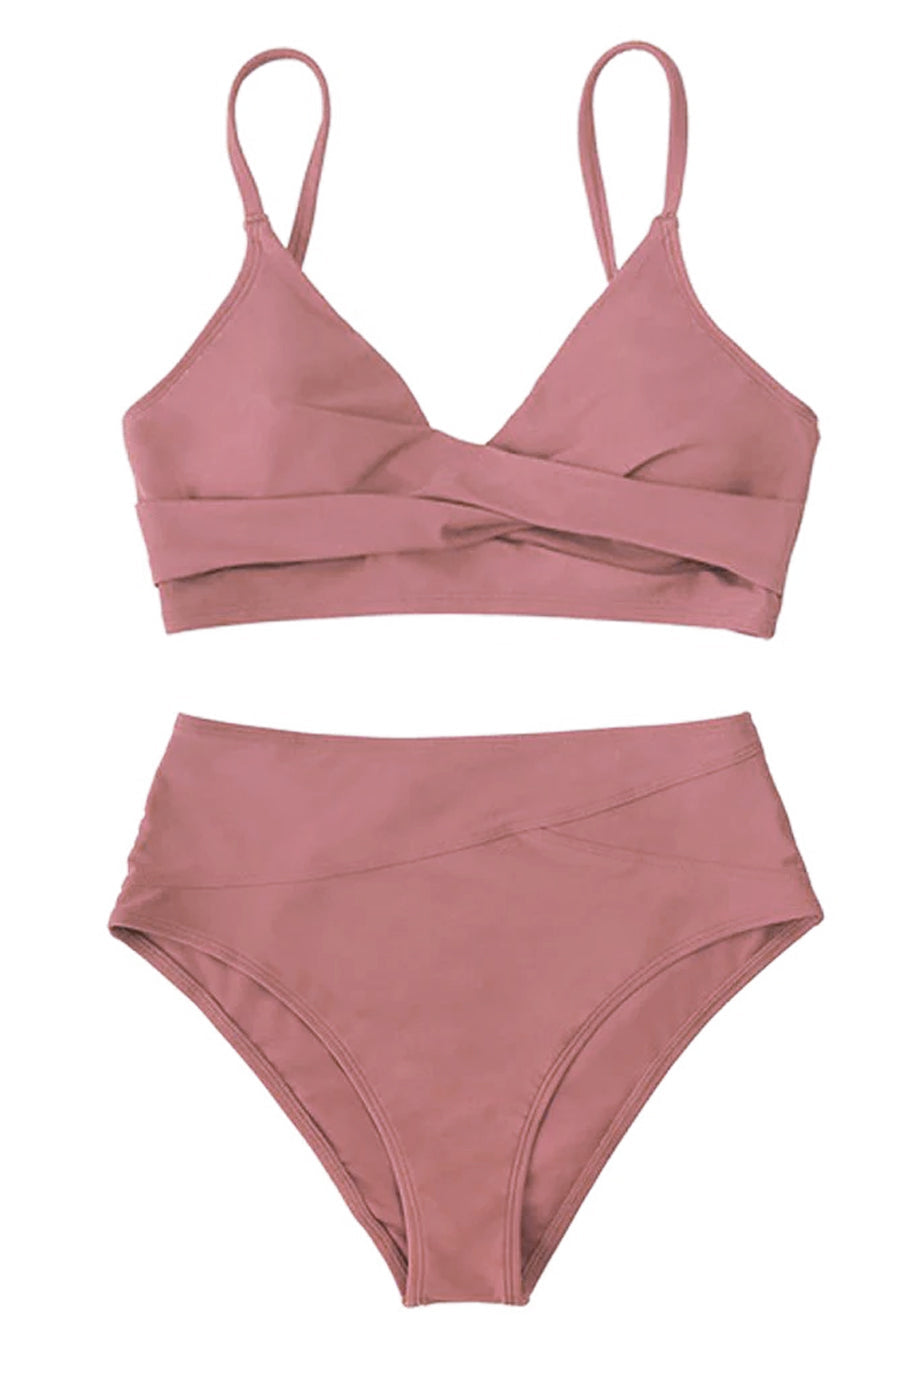 Sirenity Ροζ Μπικίνι Μαγιό | Γυναικεία Μαγιό Μπικίνι - Beachwear - Bikini | Sirenity Pink Bikini